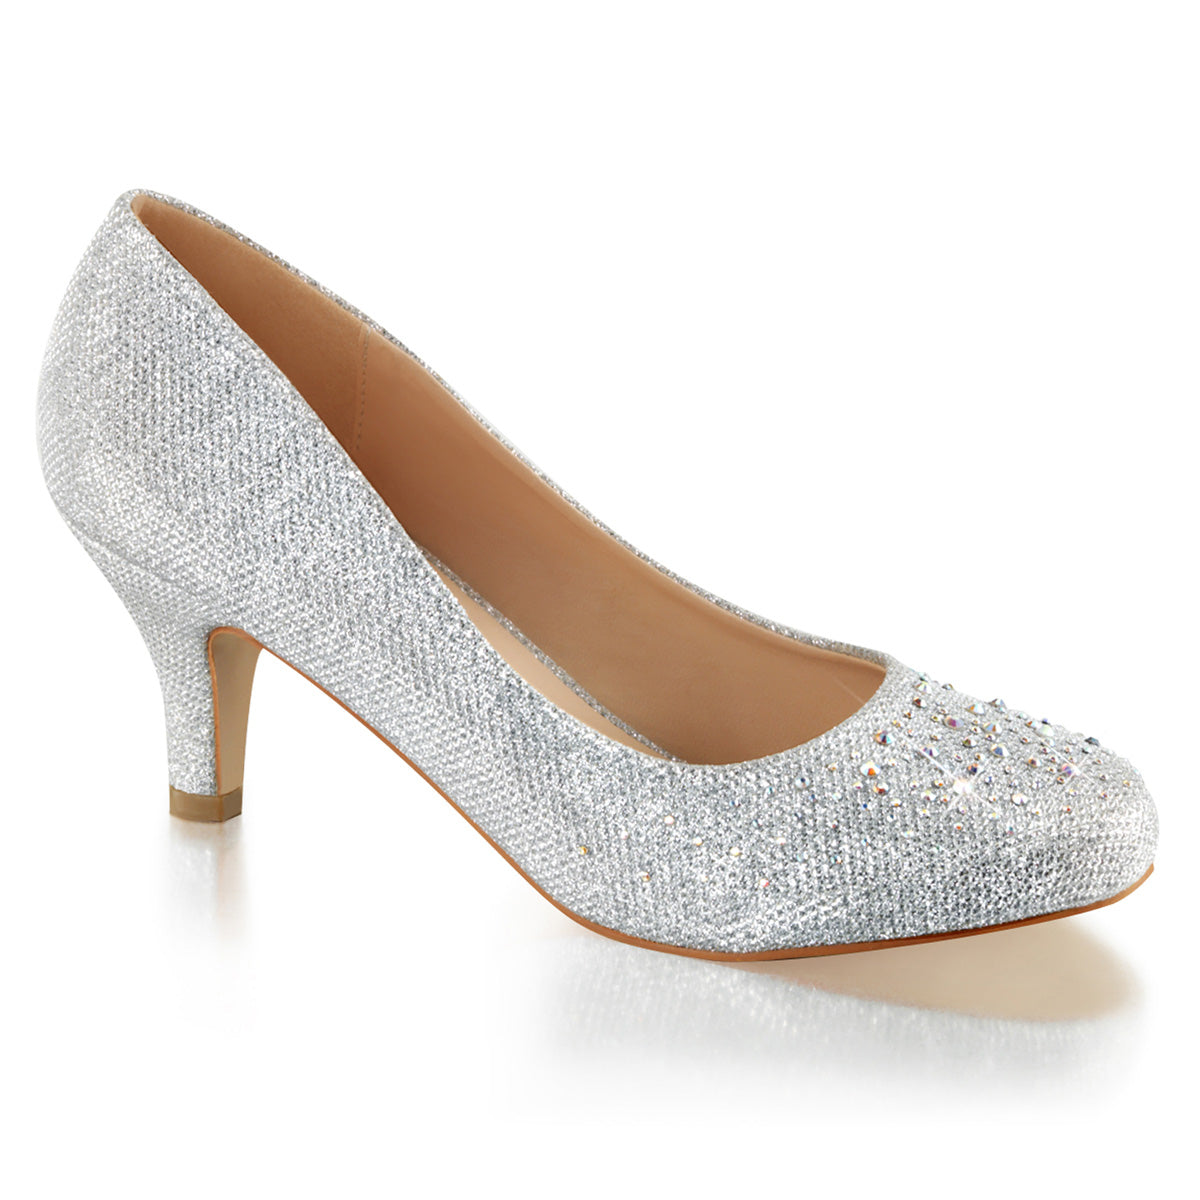 DORIS-06 Fabulicious 2.5 Inch Heel Silver Glitter Sexy Shoes